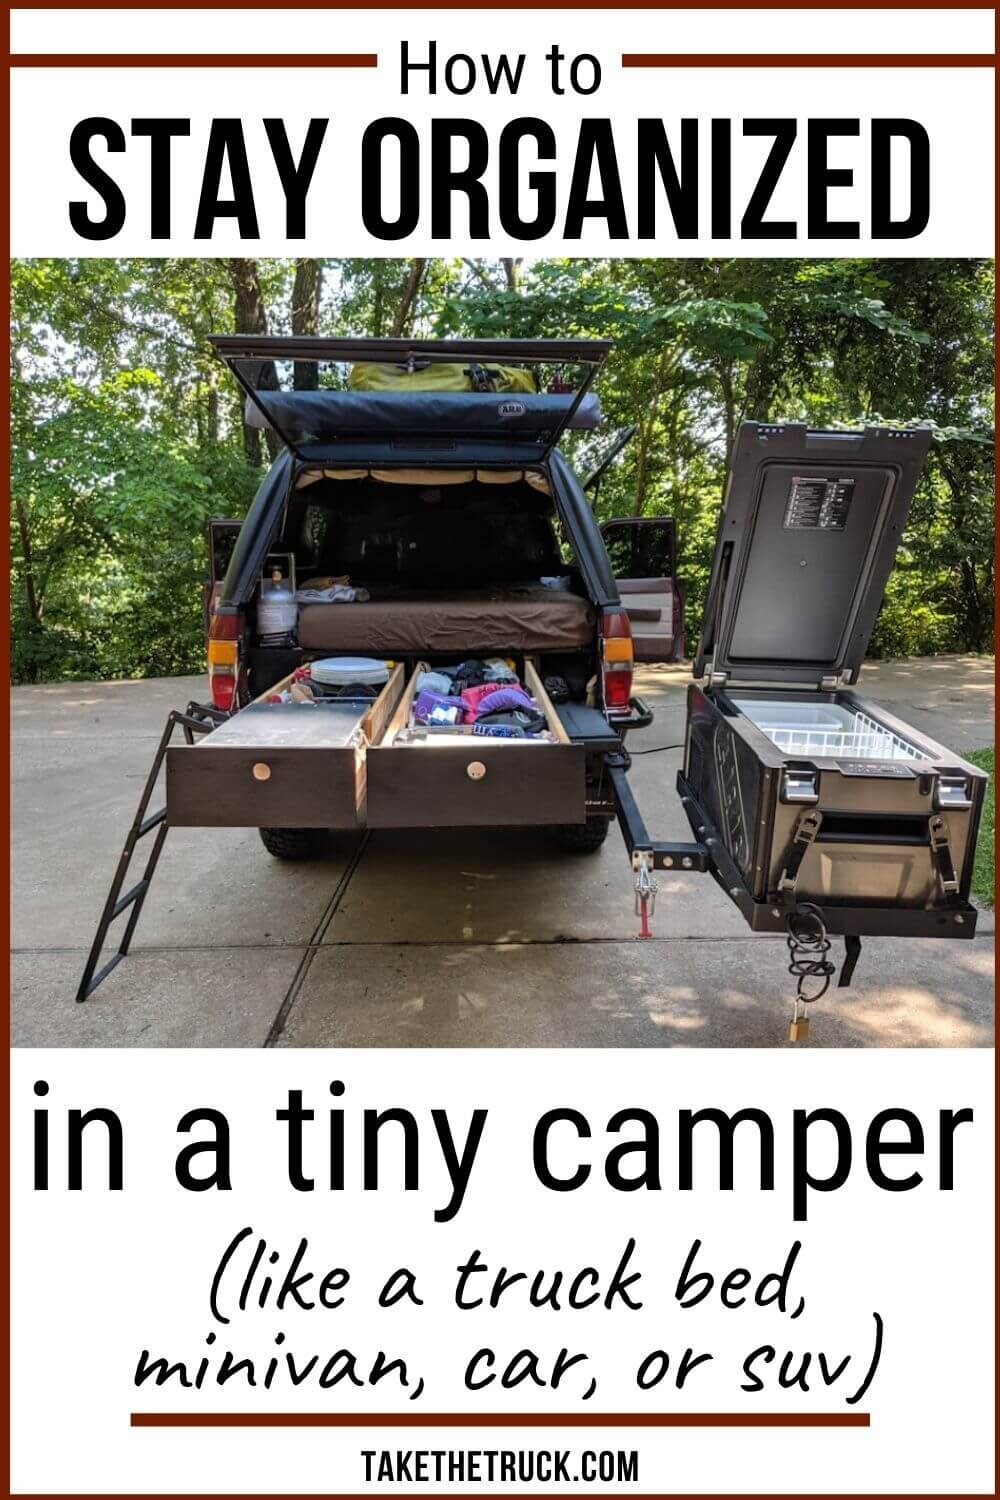 Truck Bed Camper Interior: Organization and Space-Saving Storage Ideas ...